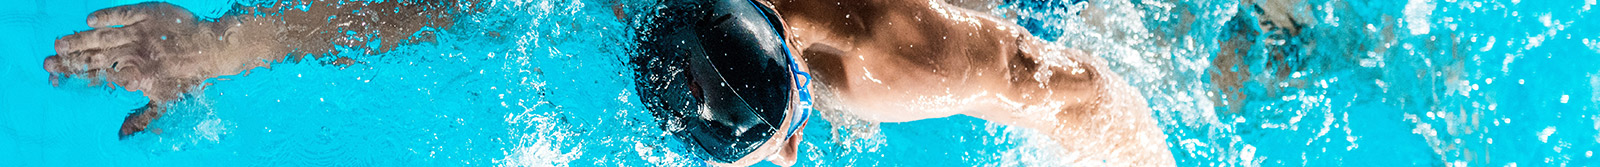 Swim Spas & Resistance Aquatic Fitness Pools by British Swim Spas